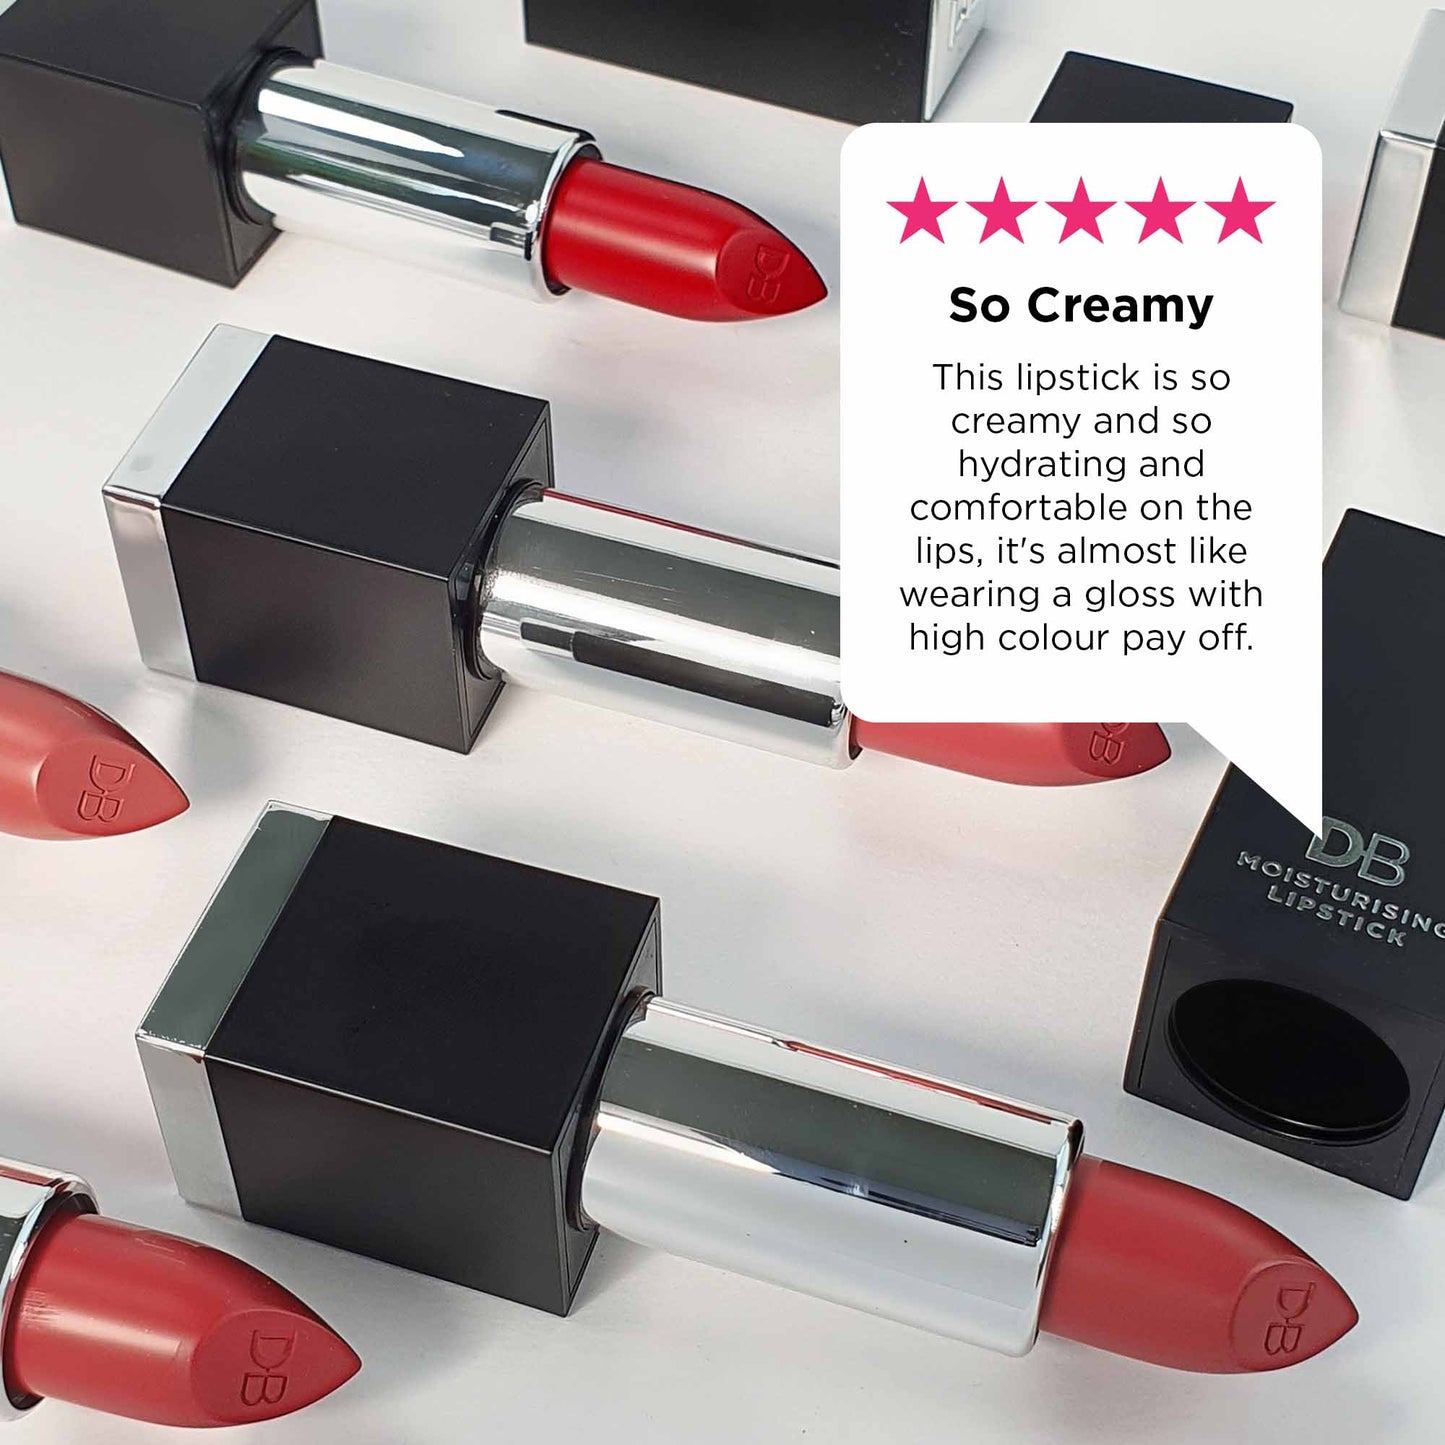 Lush Moisturising Lipstick Hero Review | DB Cosmetics